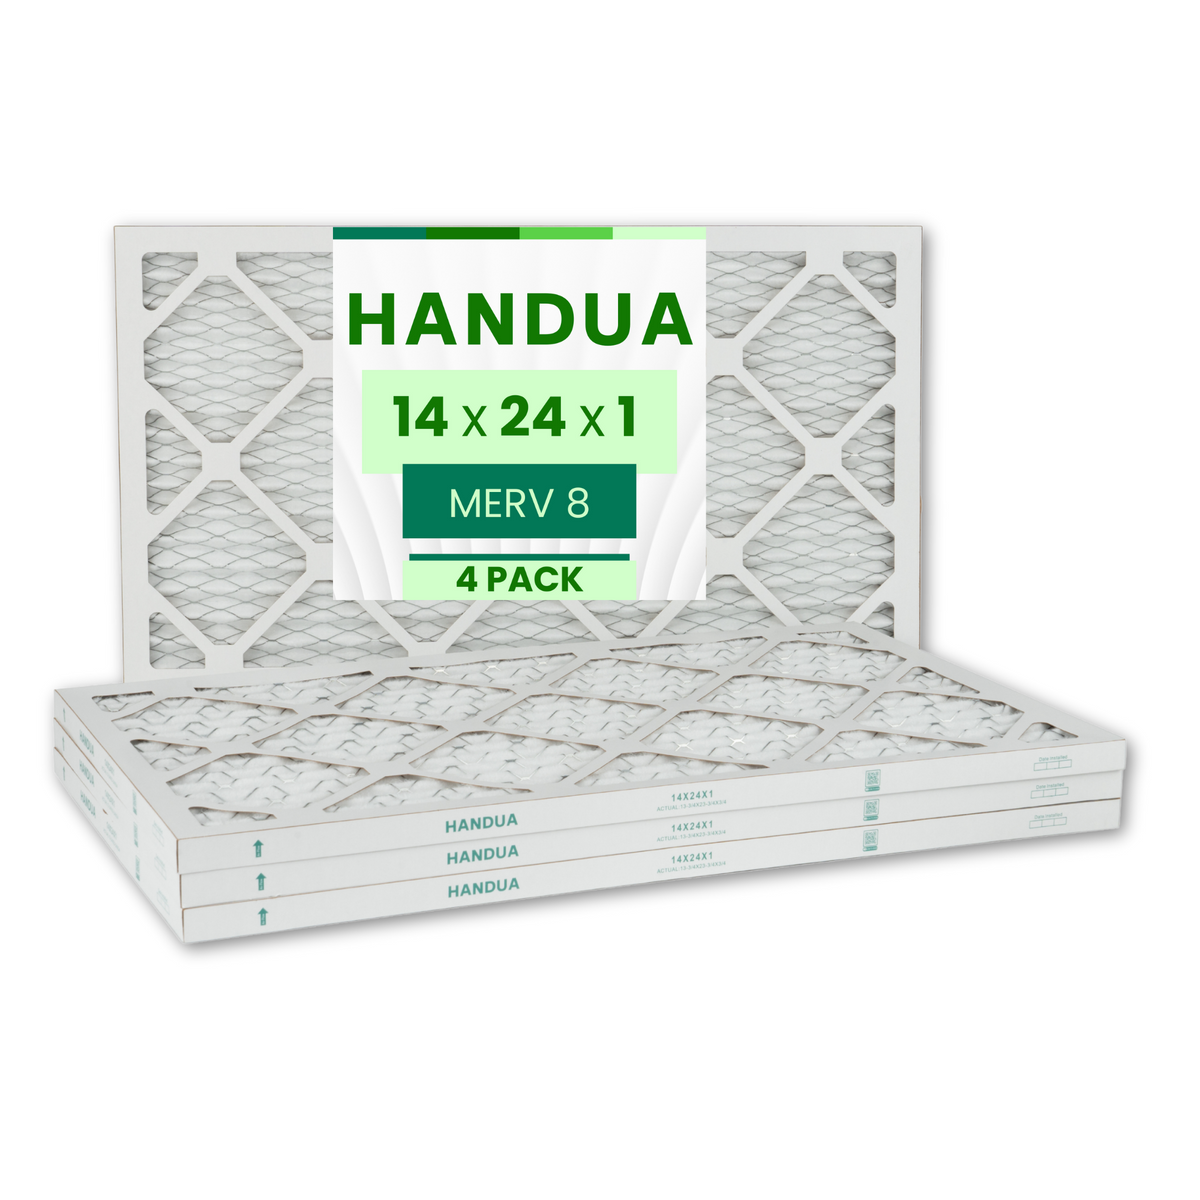 Handua 14x24x1 Air Filter MERV 8 Dust Control, Plated Furnace AC Air Replacement Filter, 4 Pack (Actual Size: 13.75" x 23.75" x 0.75")